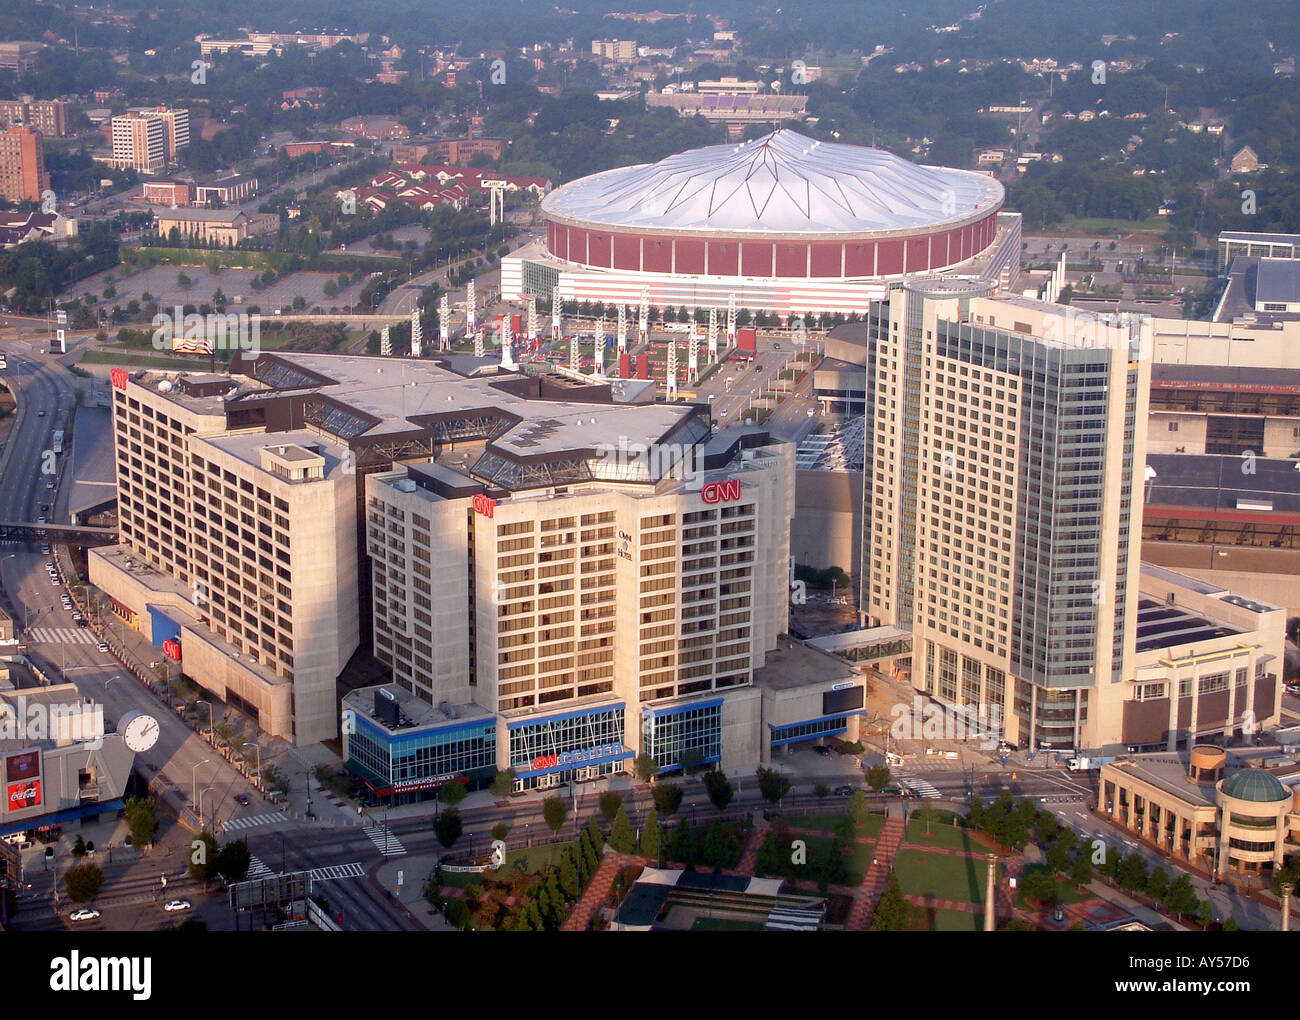 CNN World HQ Headquarters in Atlanta USA and Georgia Dome Stock Photo